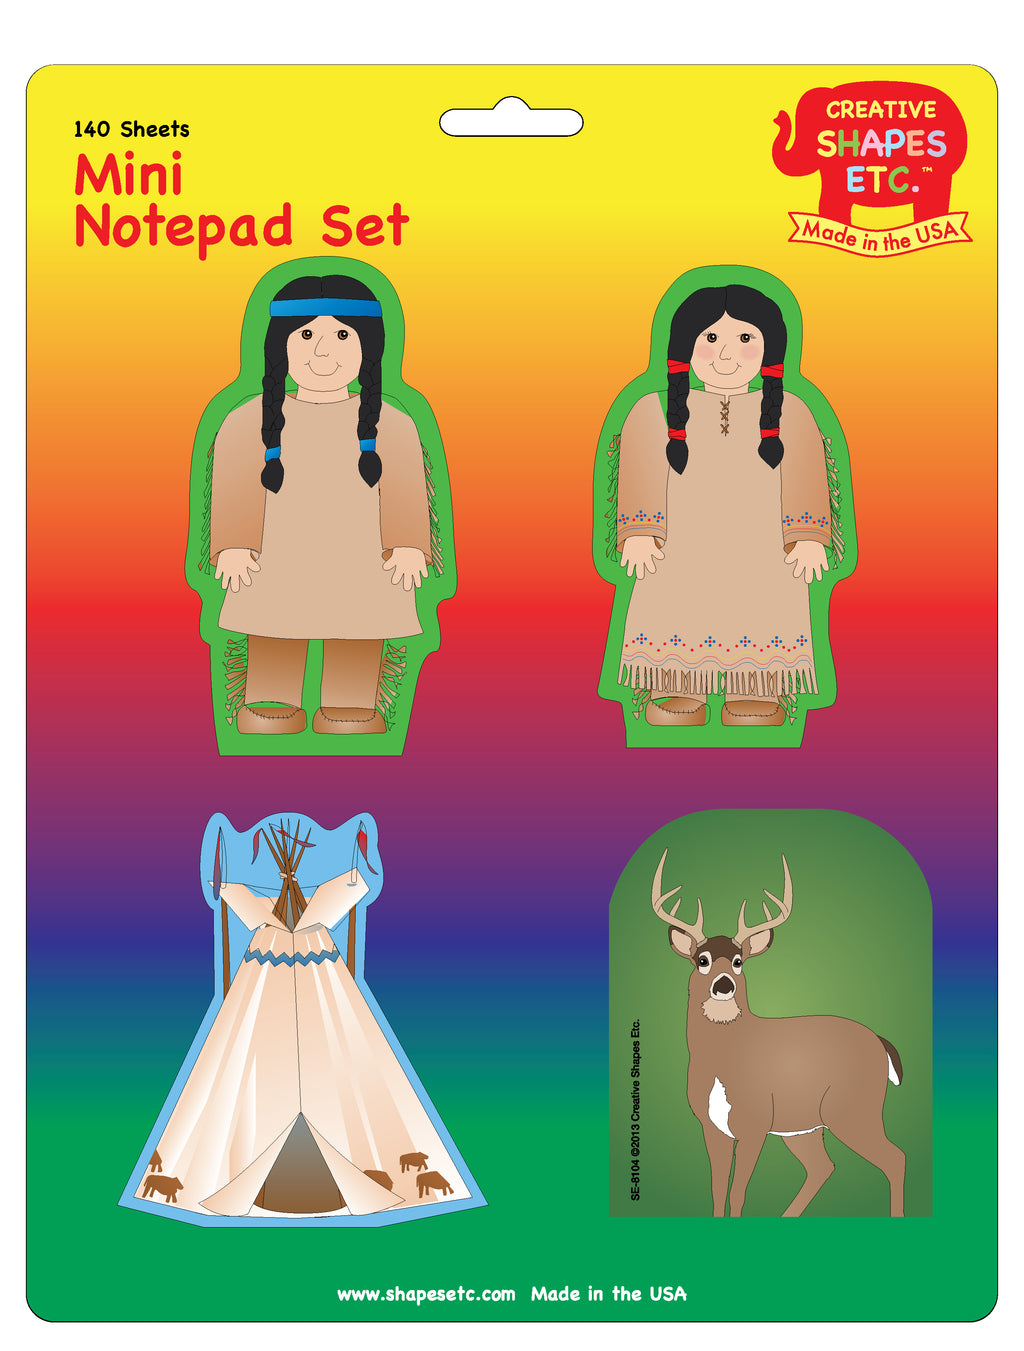 Mini Notepad Set - Native American - Creative Shapes Etc.